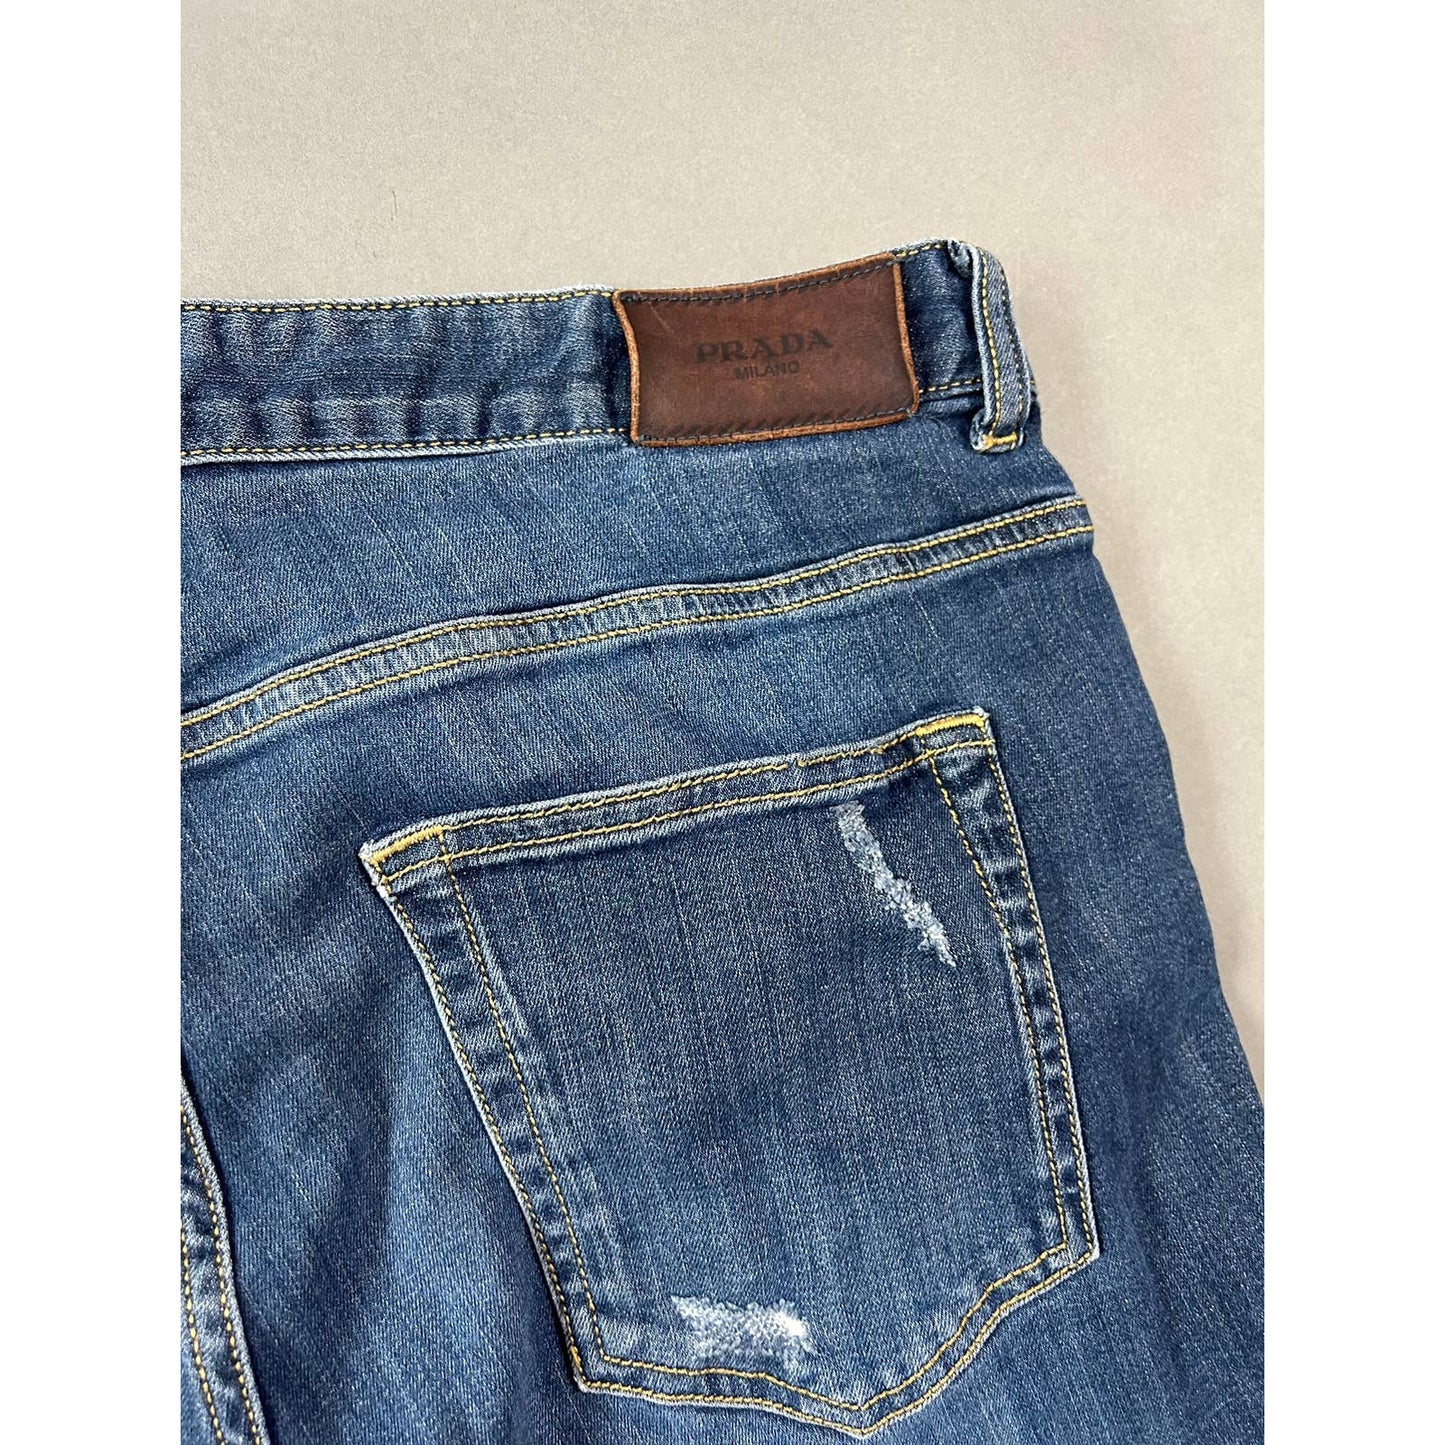 Prada jeans straight vintage denim pants